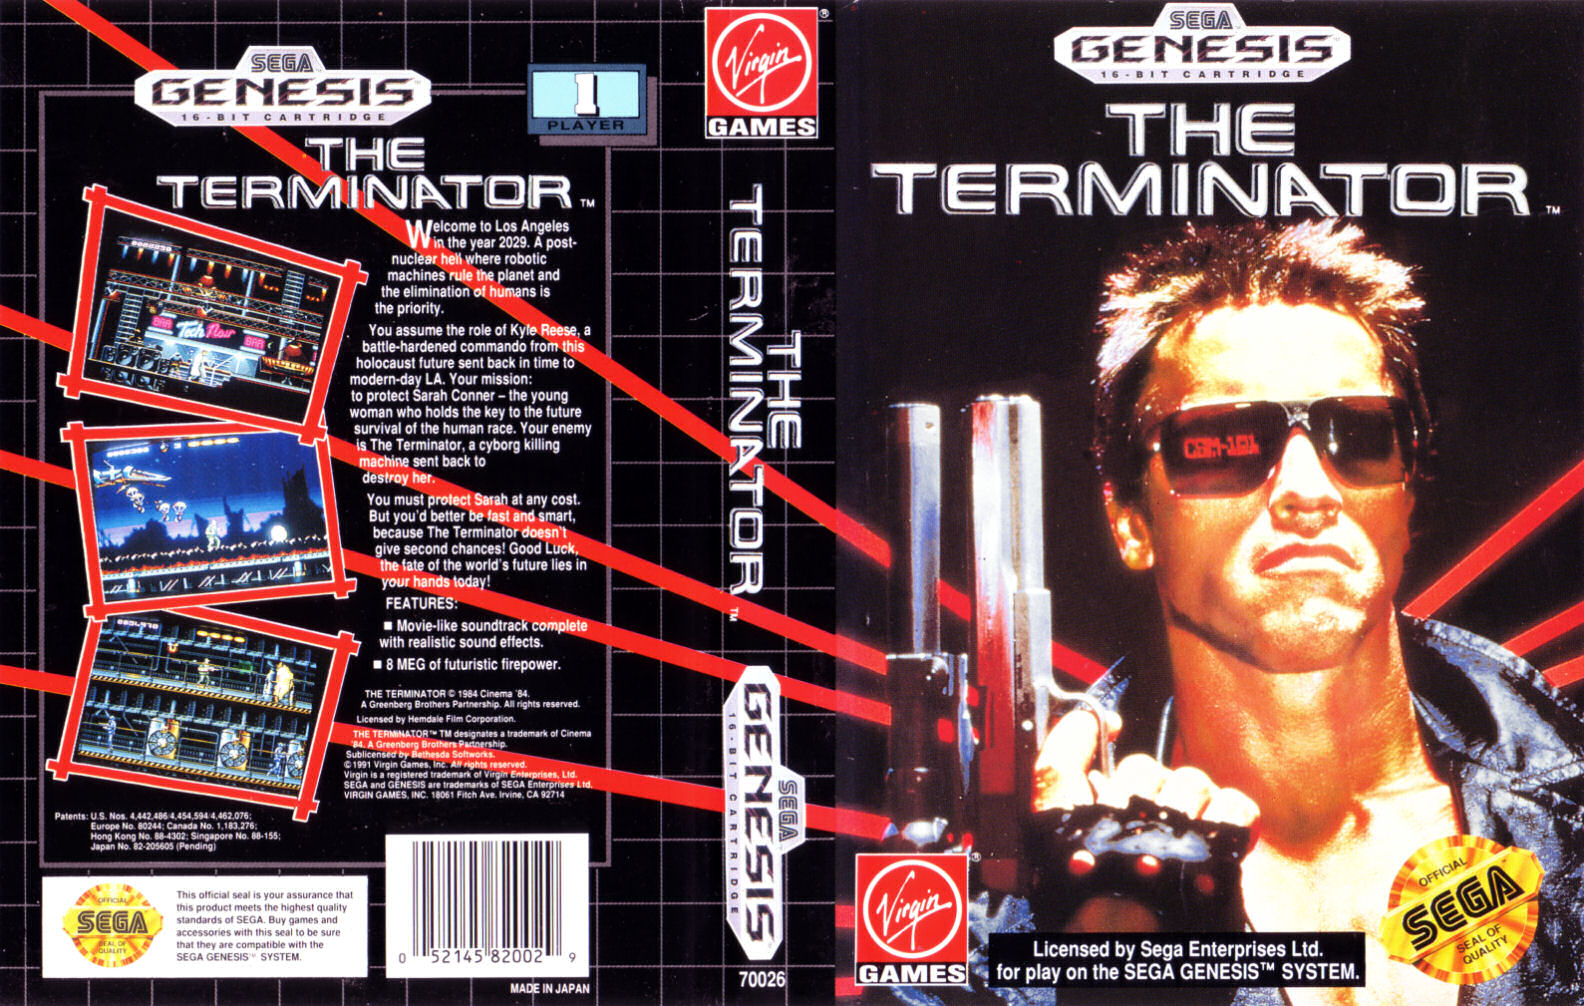 Terminator+Genesis+US+cover+art.jpeg